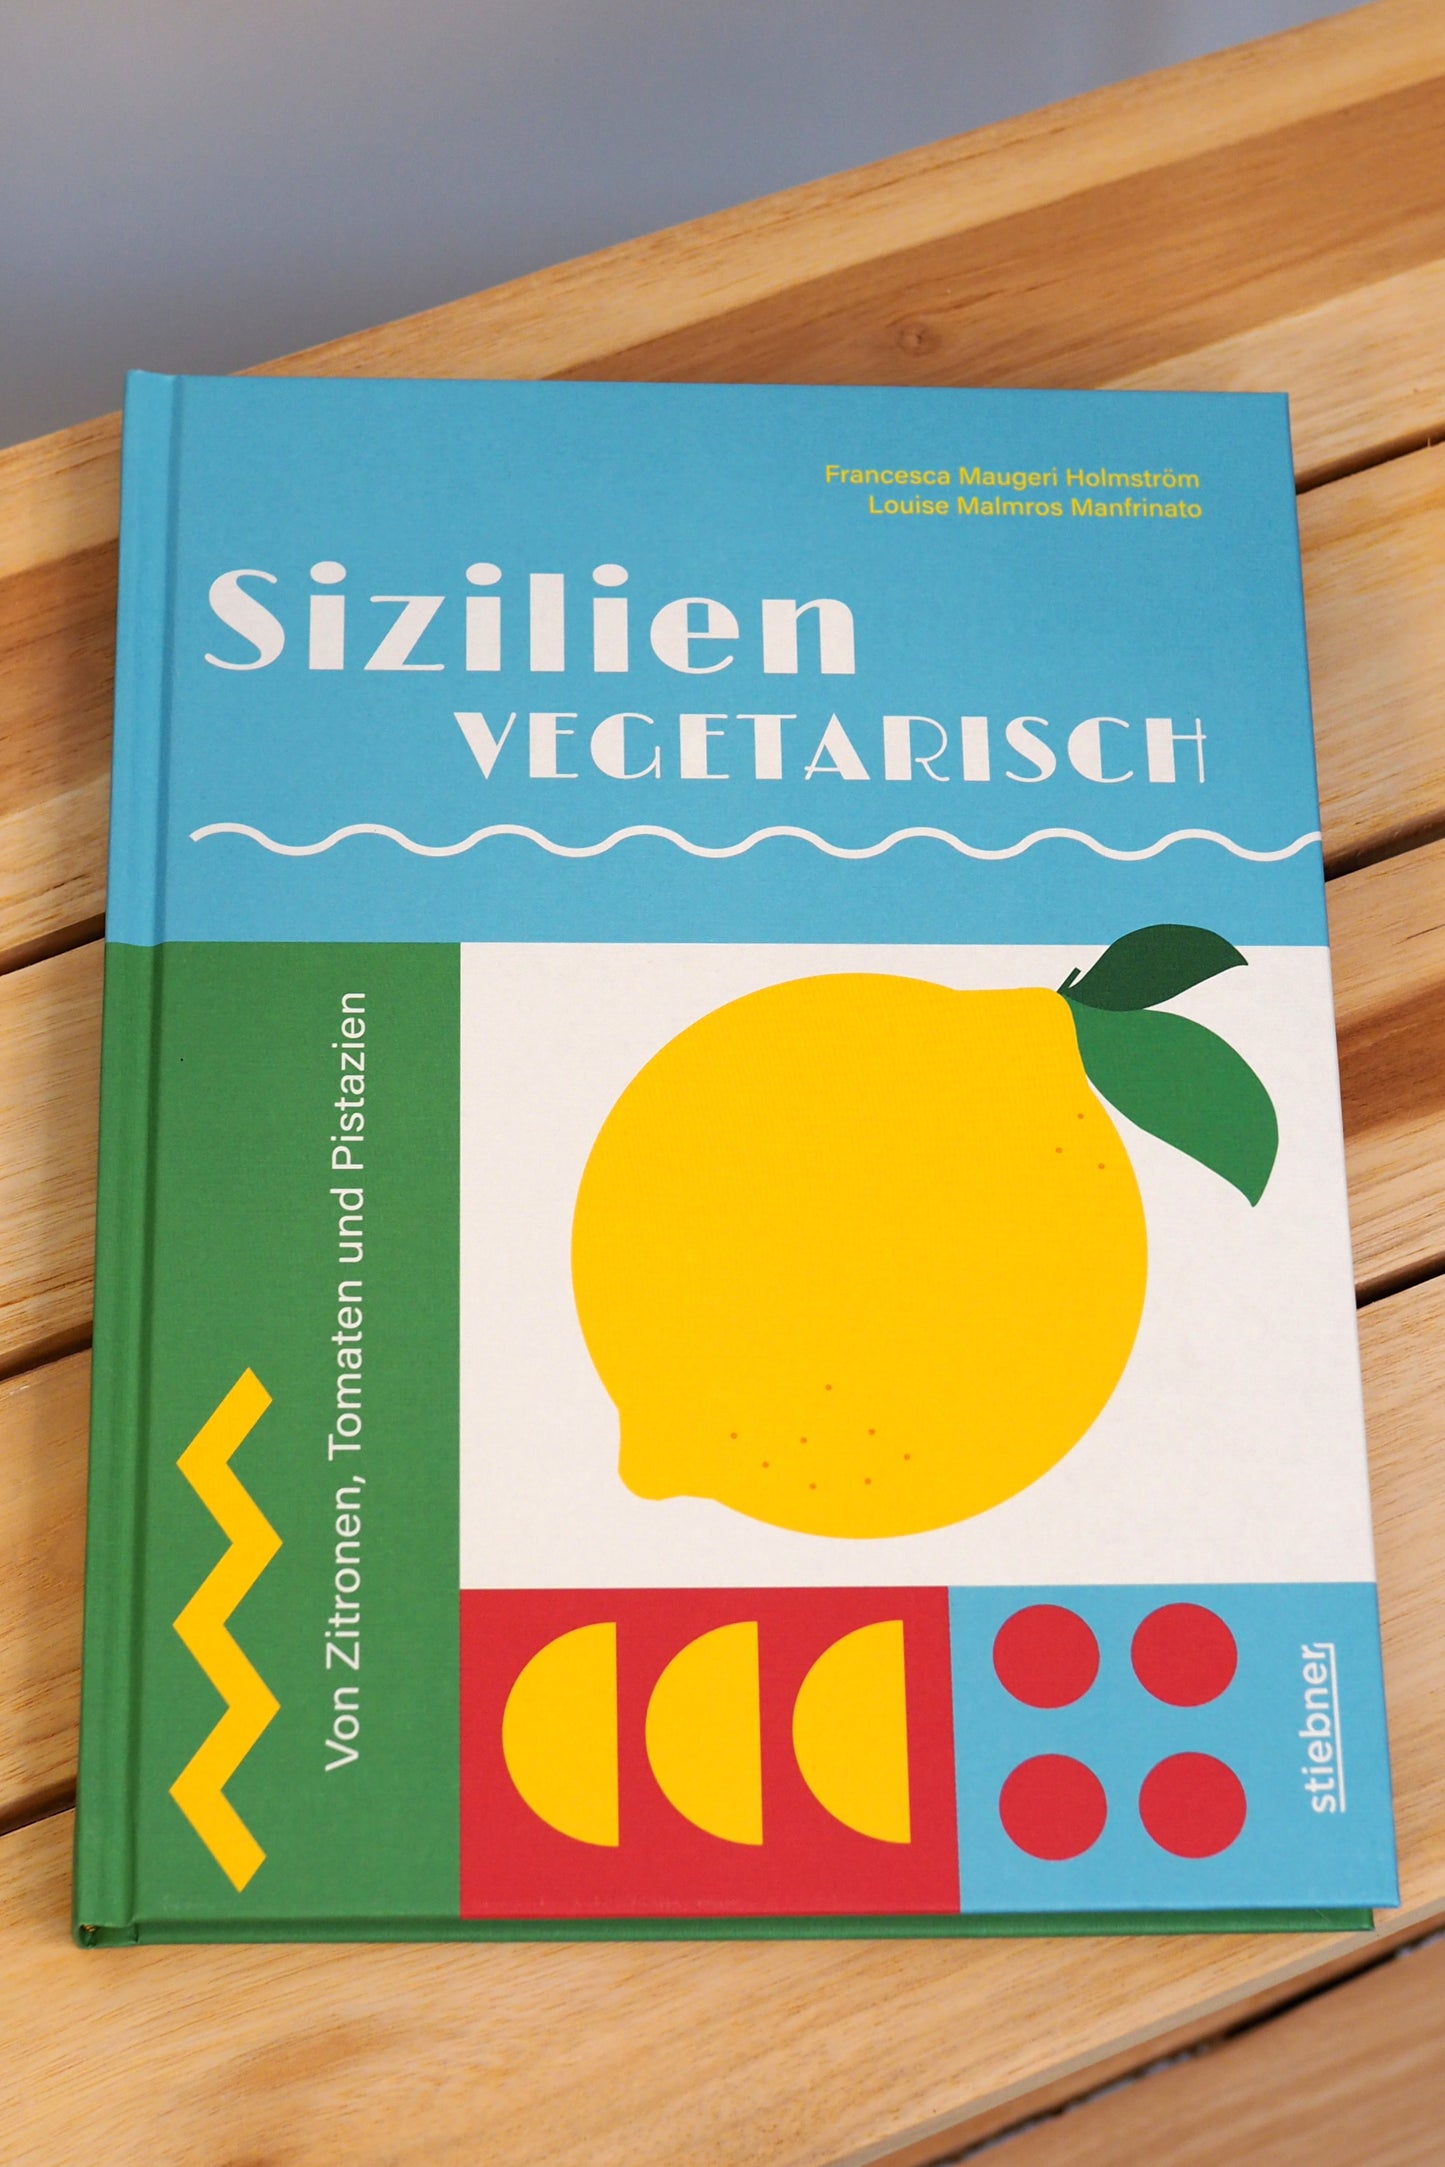 Sizilien vegetarisch by Francesca Maugeri Holmström; Louise Malmros Manfrinato - German Edition -